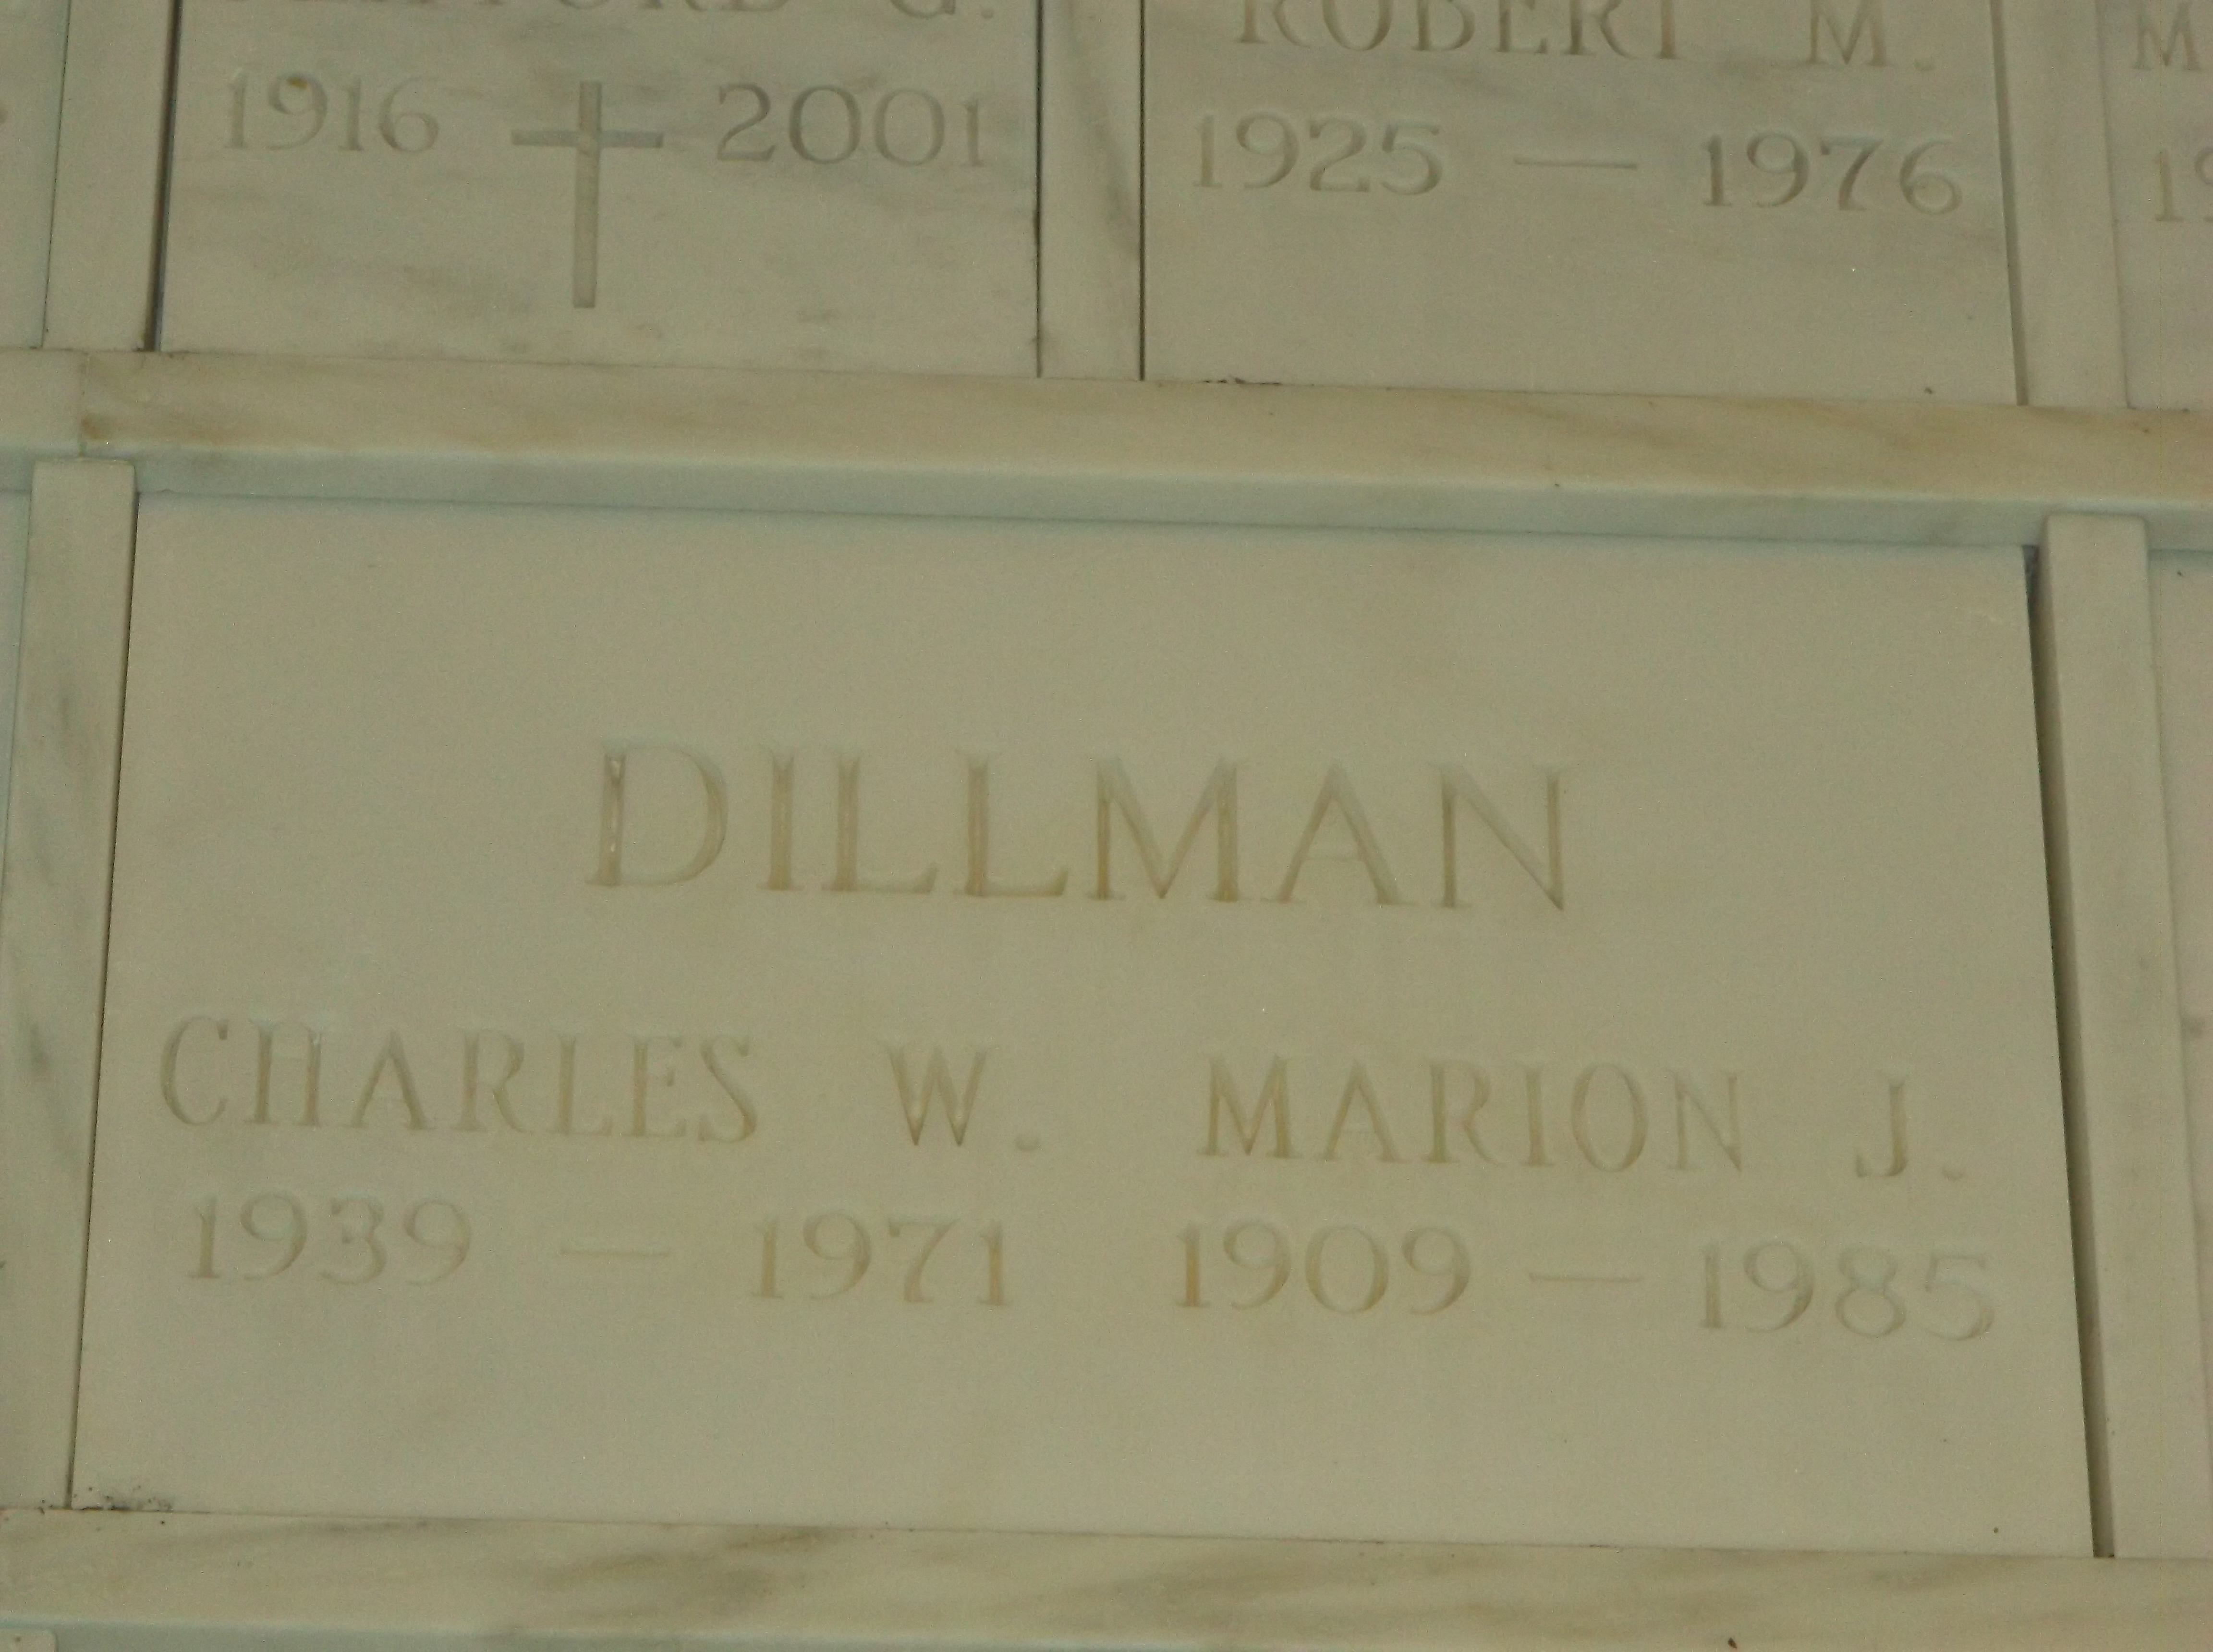 Charles W Dillman